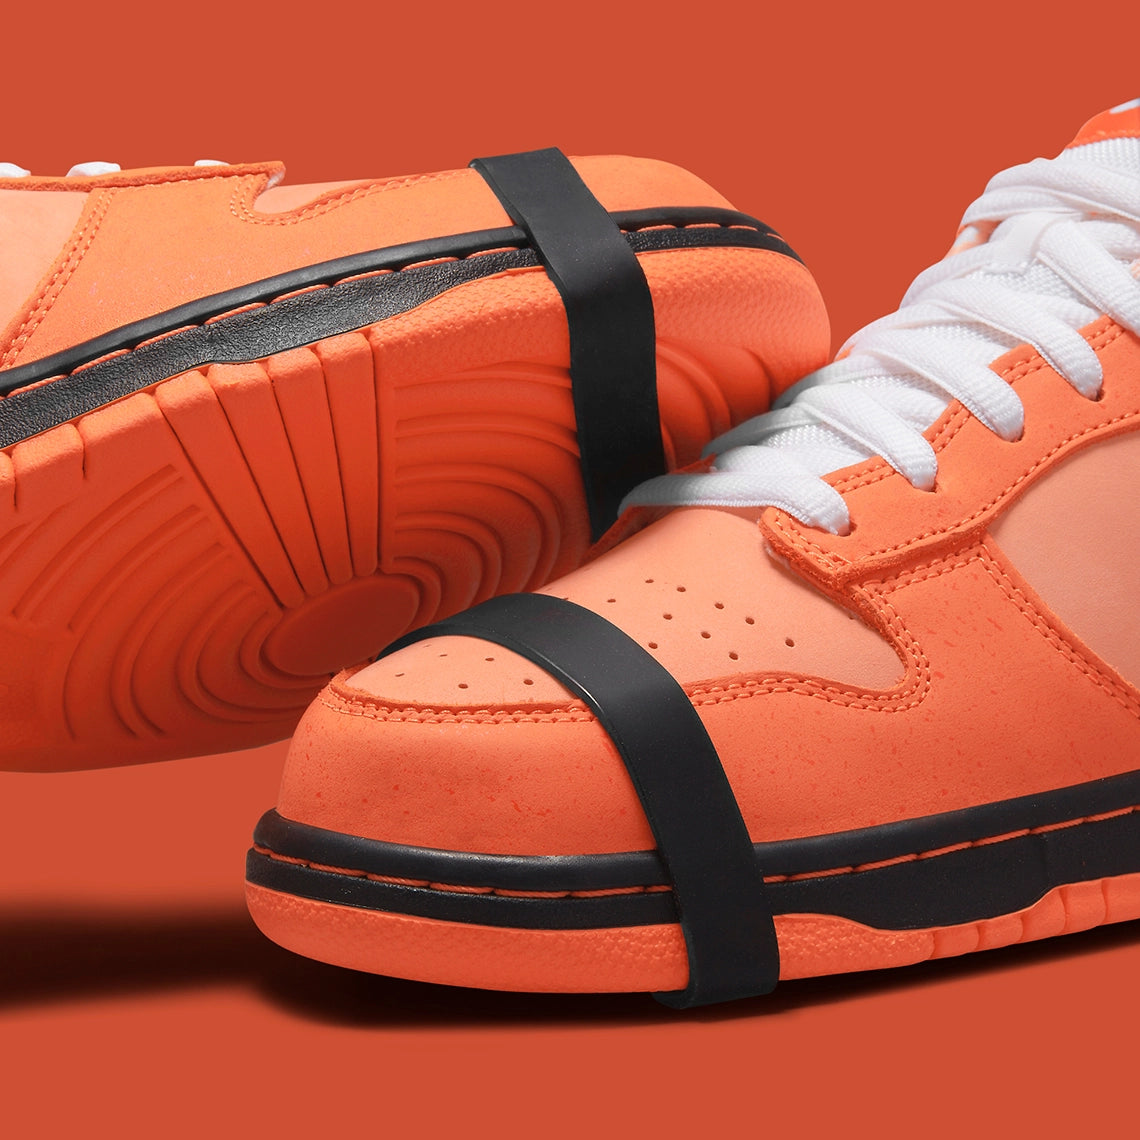 Nike SB Dunk (Low) x Concepts "Orange Lobster"